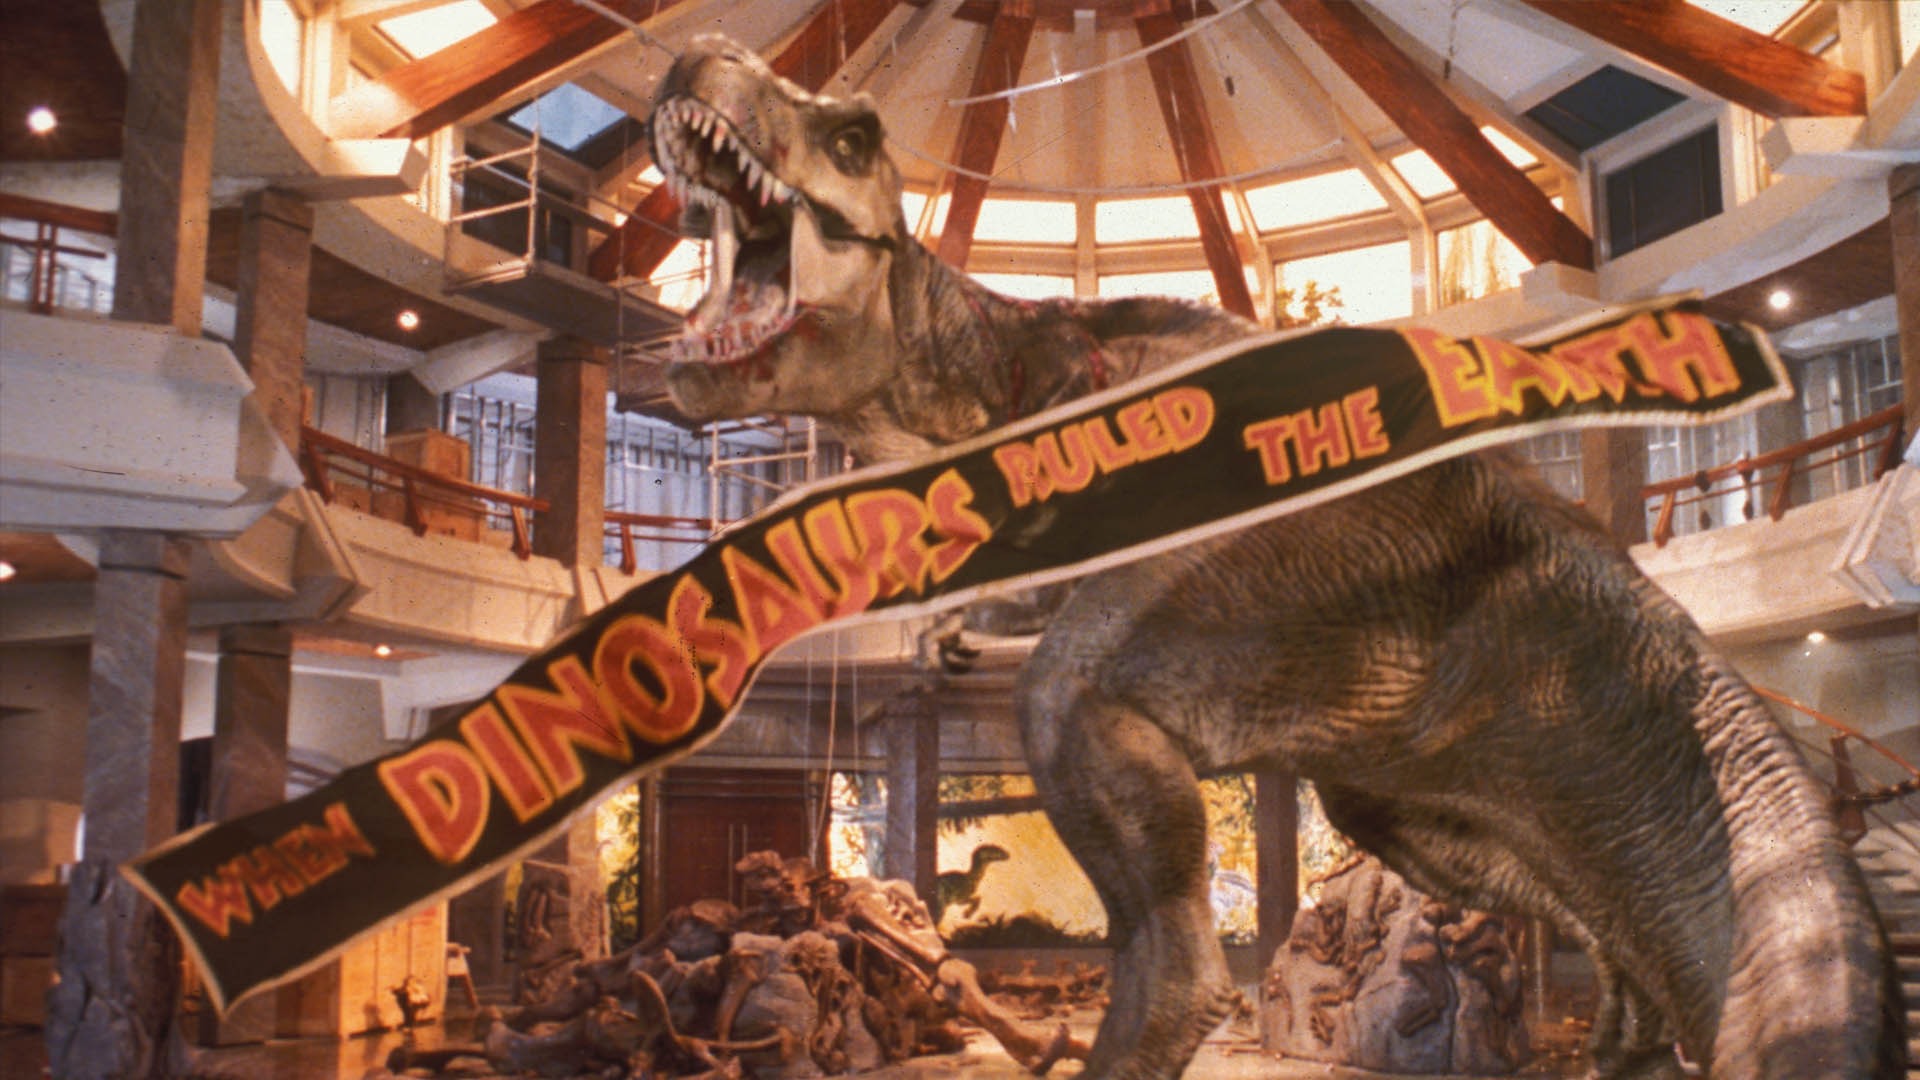 Jurassic World Epic Roarin' Tyrannosaurus Rex Brown  - Best Buy